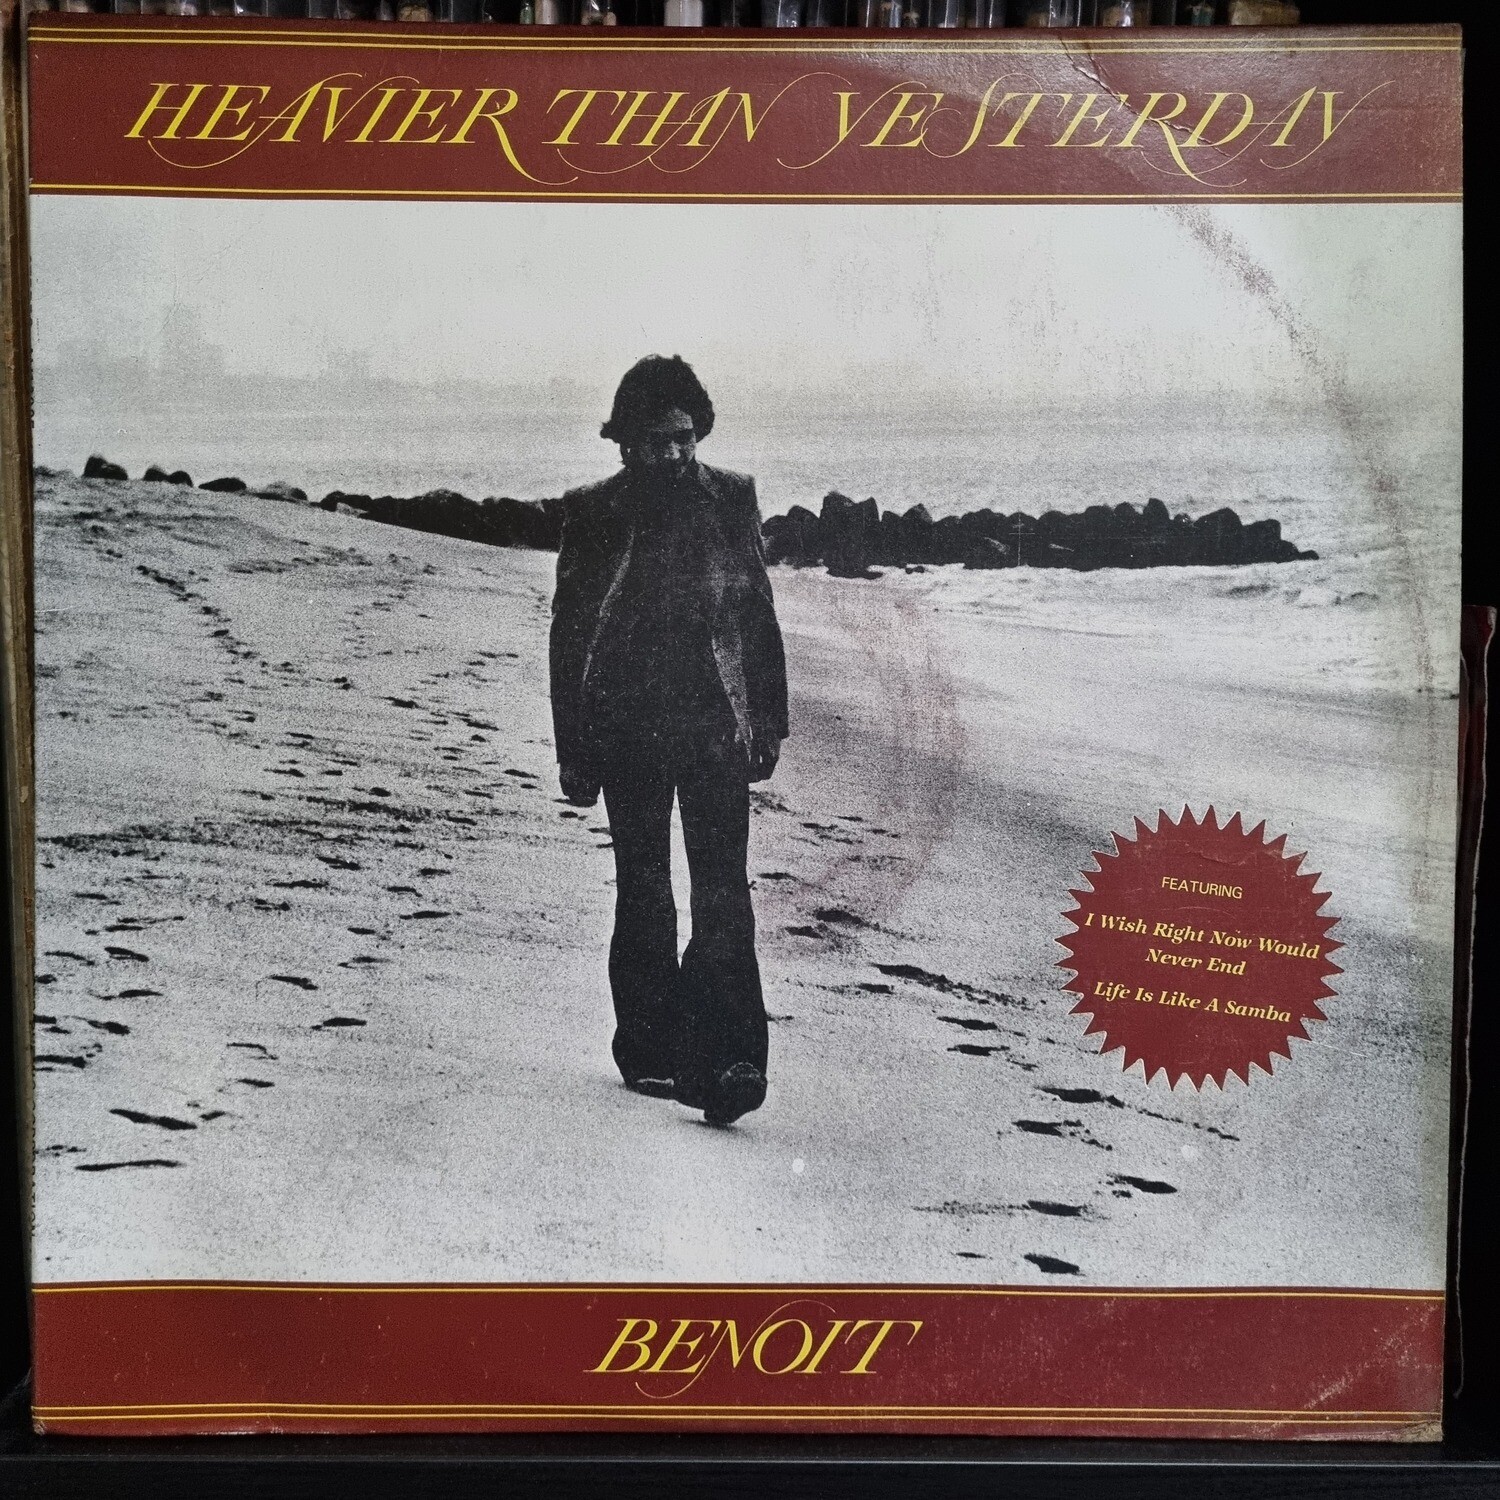 David Benoit- Heavier Than Yesterday